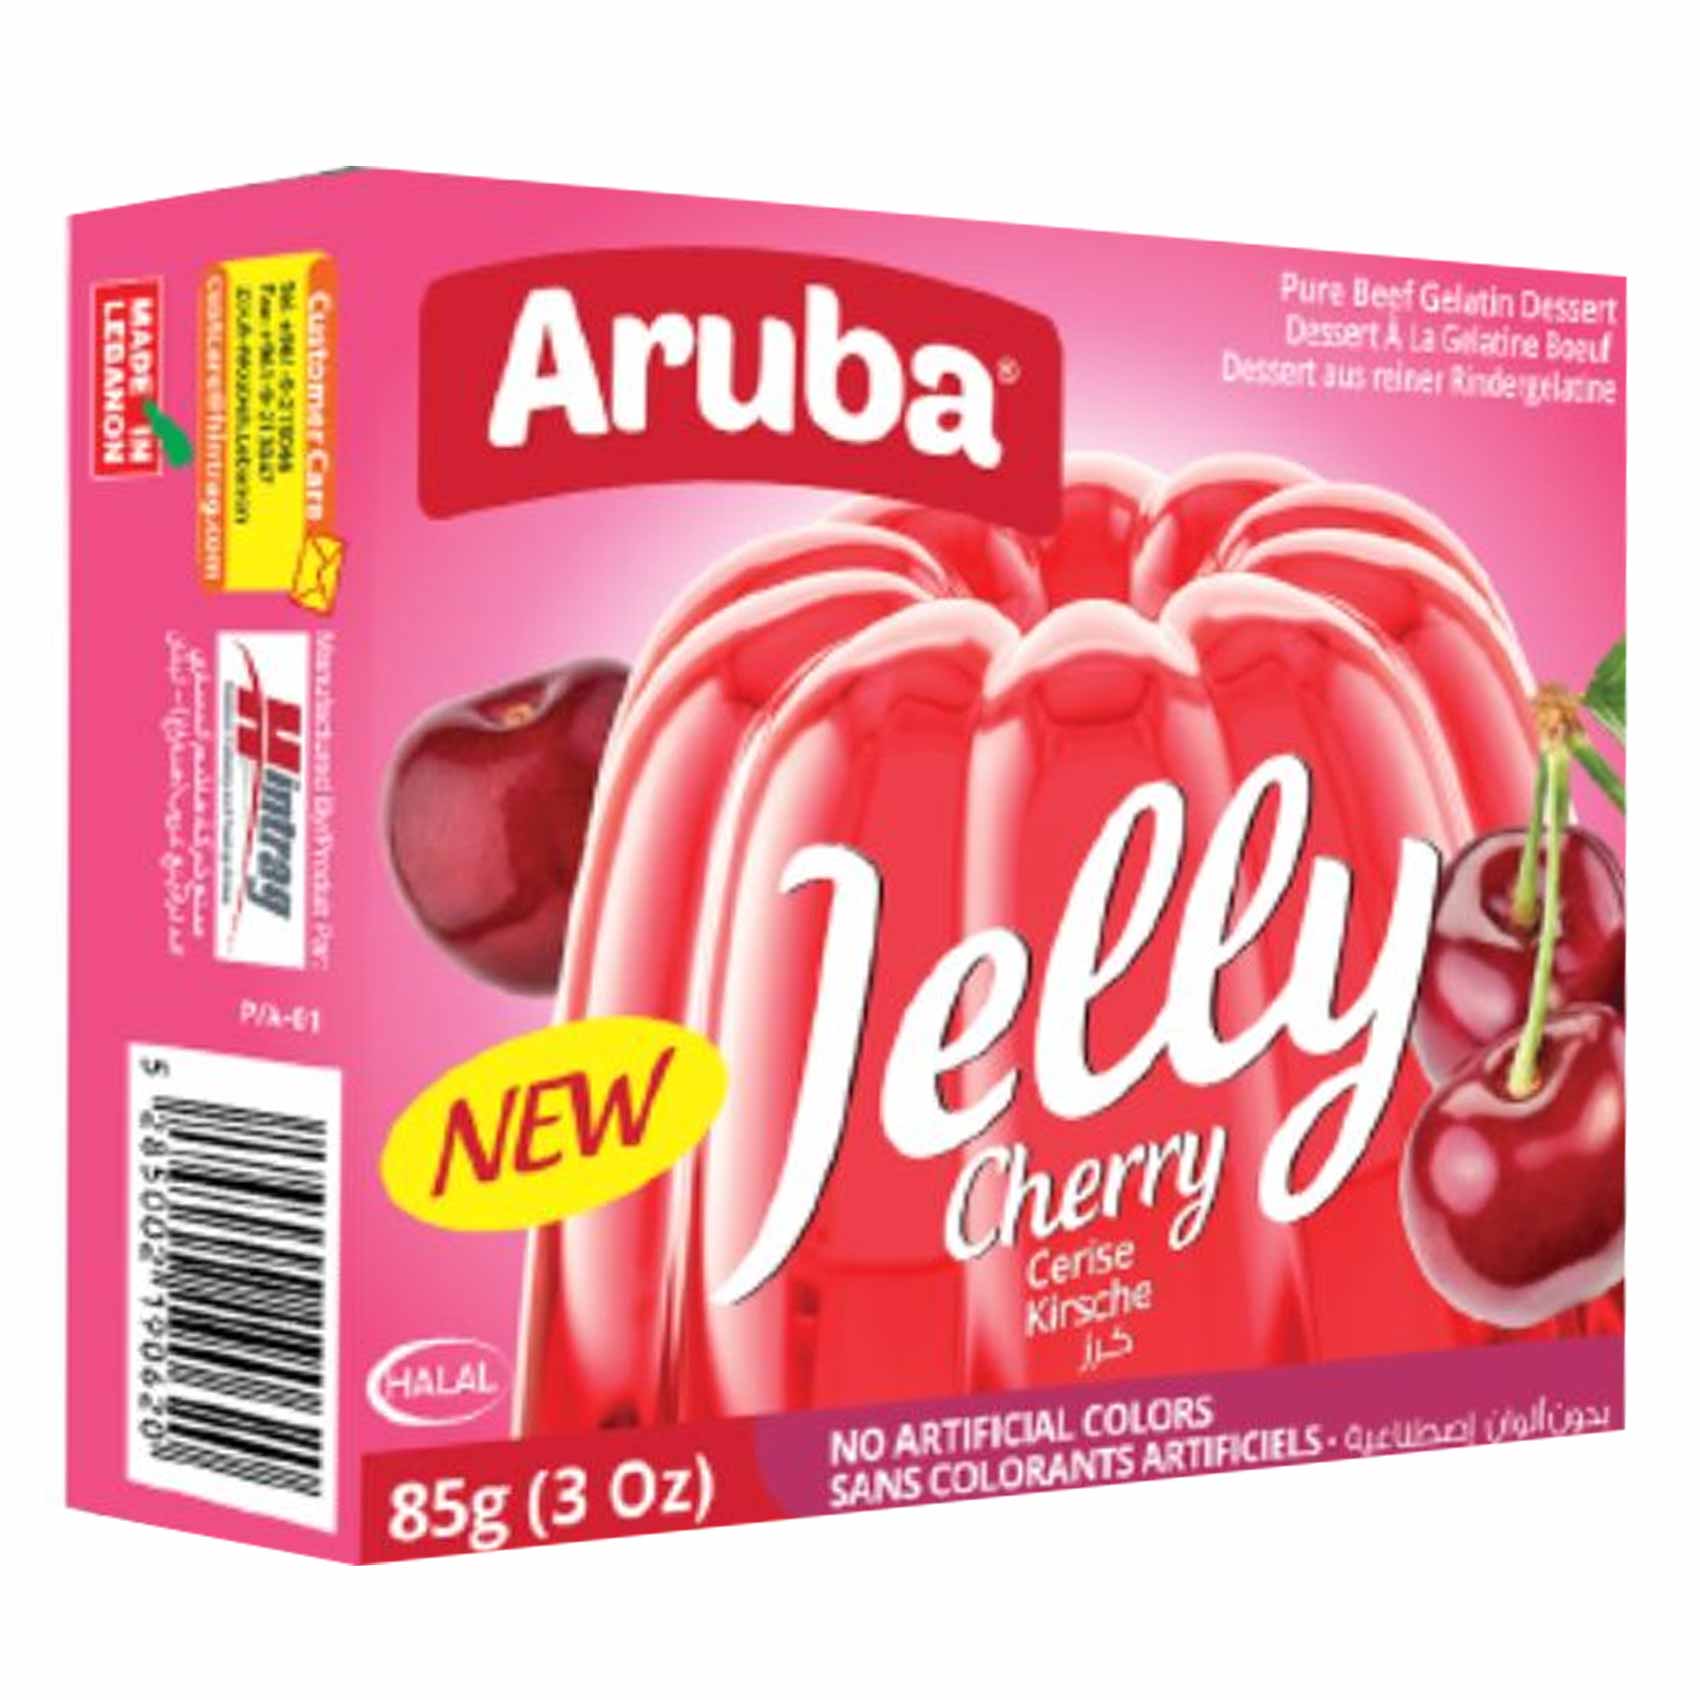 Aruba Cherry Jelly 85g